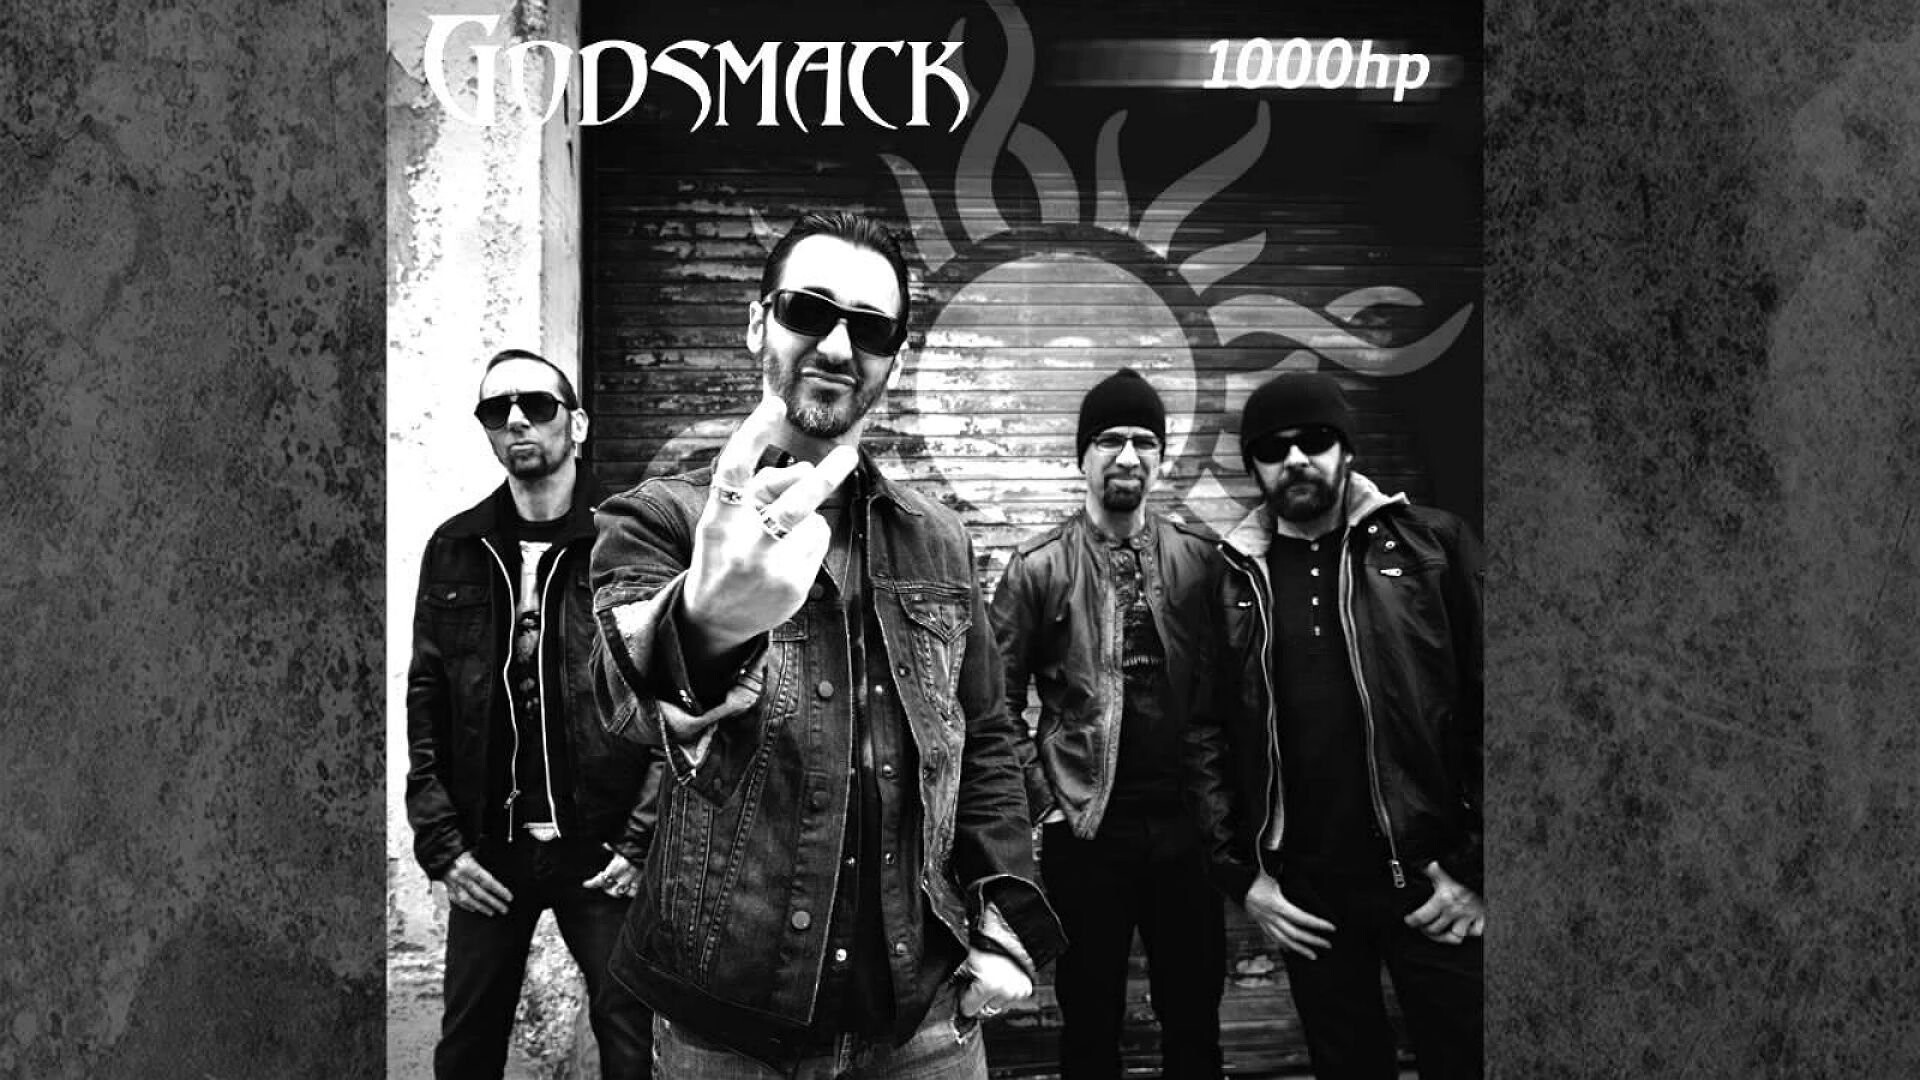 Godsmack: Alternative, Heavy Metal, Nu-metal, Hard Rock, Sully Erna, Tony Rombola, 1000hp. 1920x1080 Full HD Background.